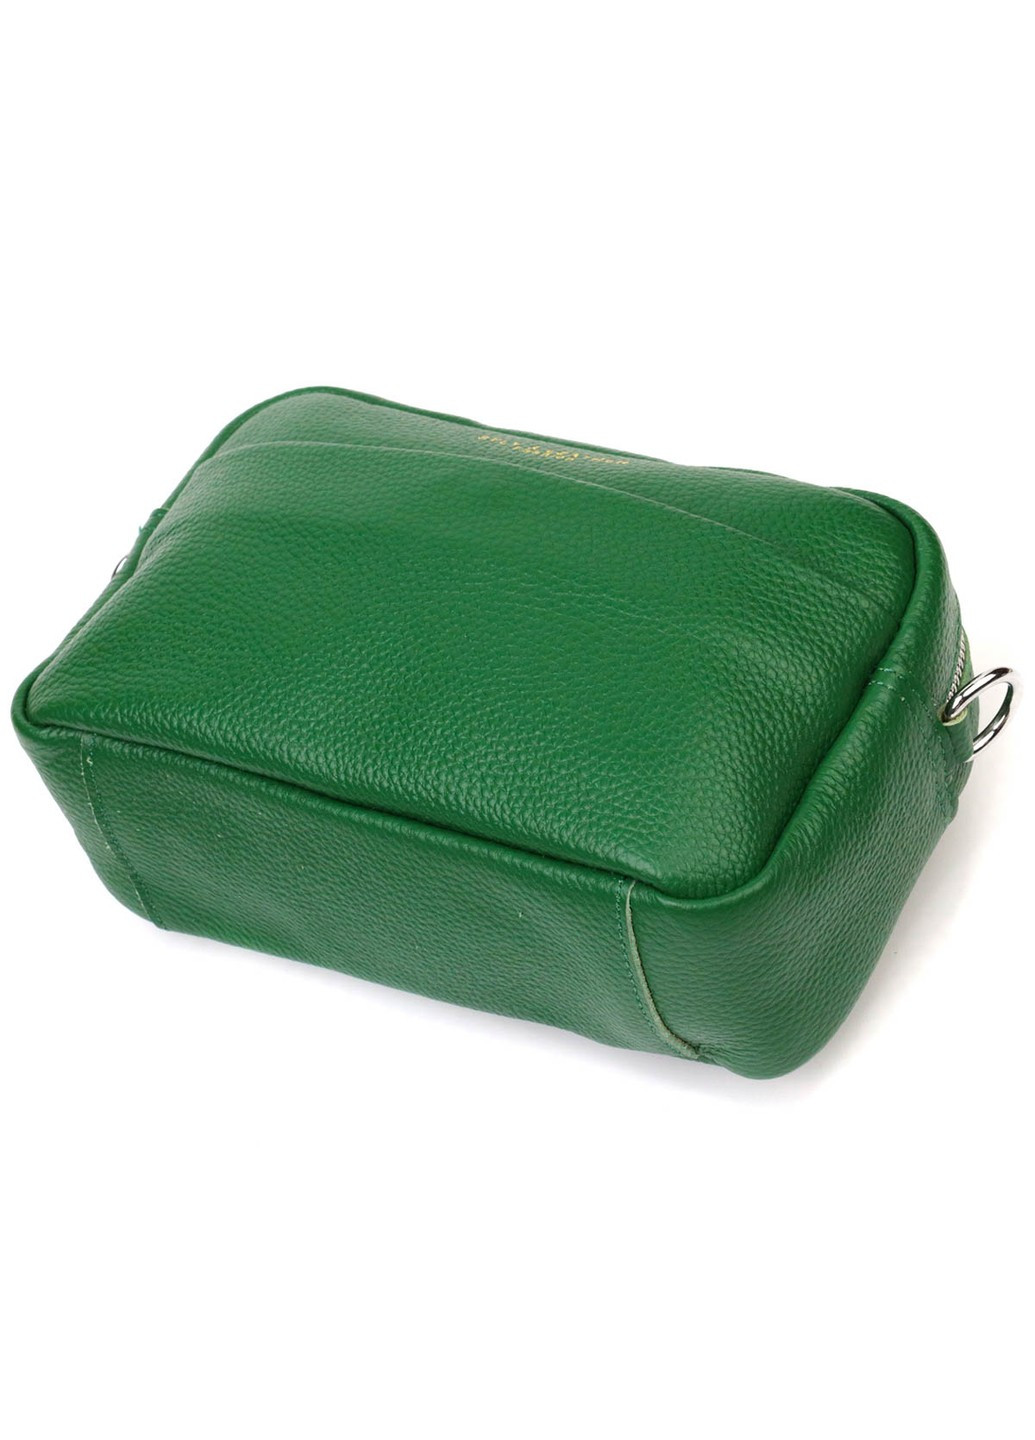 Сучасна жіноча сумка на плече з натуральної шкіри 22120 Зелена Vintage (260359810)